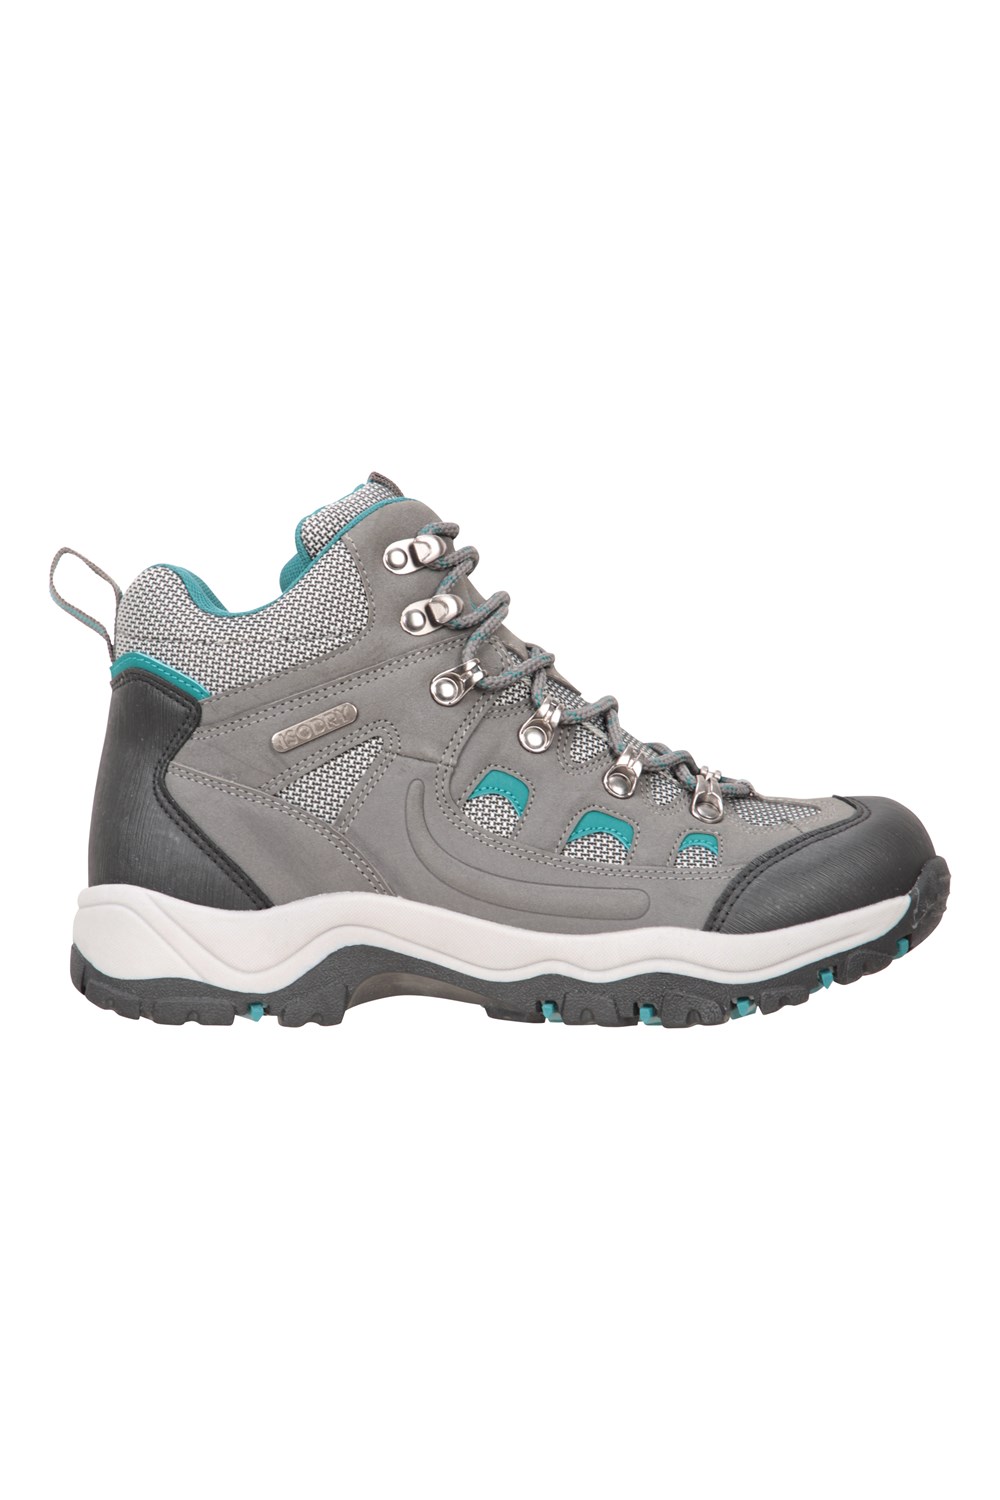 miniature 36 - Mountain Warehouse Womens Waterproof Hiking Boots Walking Trekking Ladies Boot